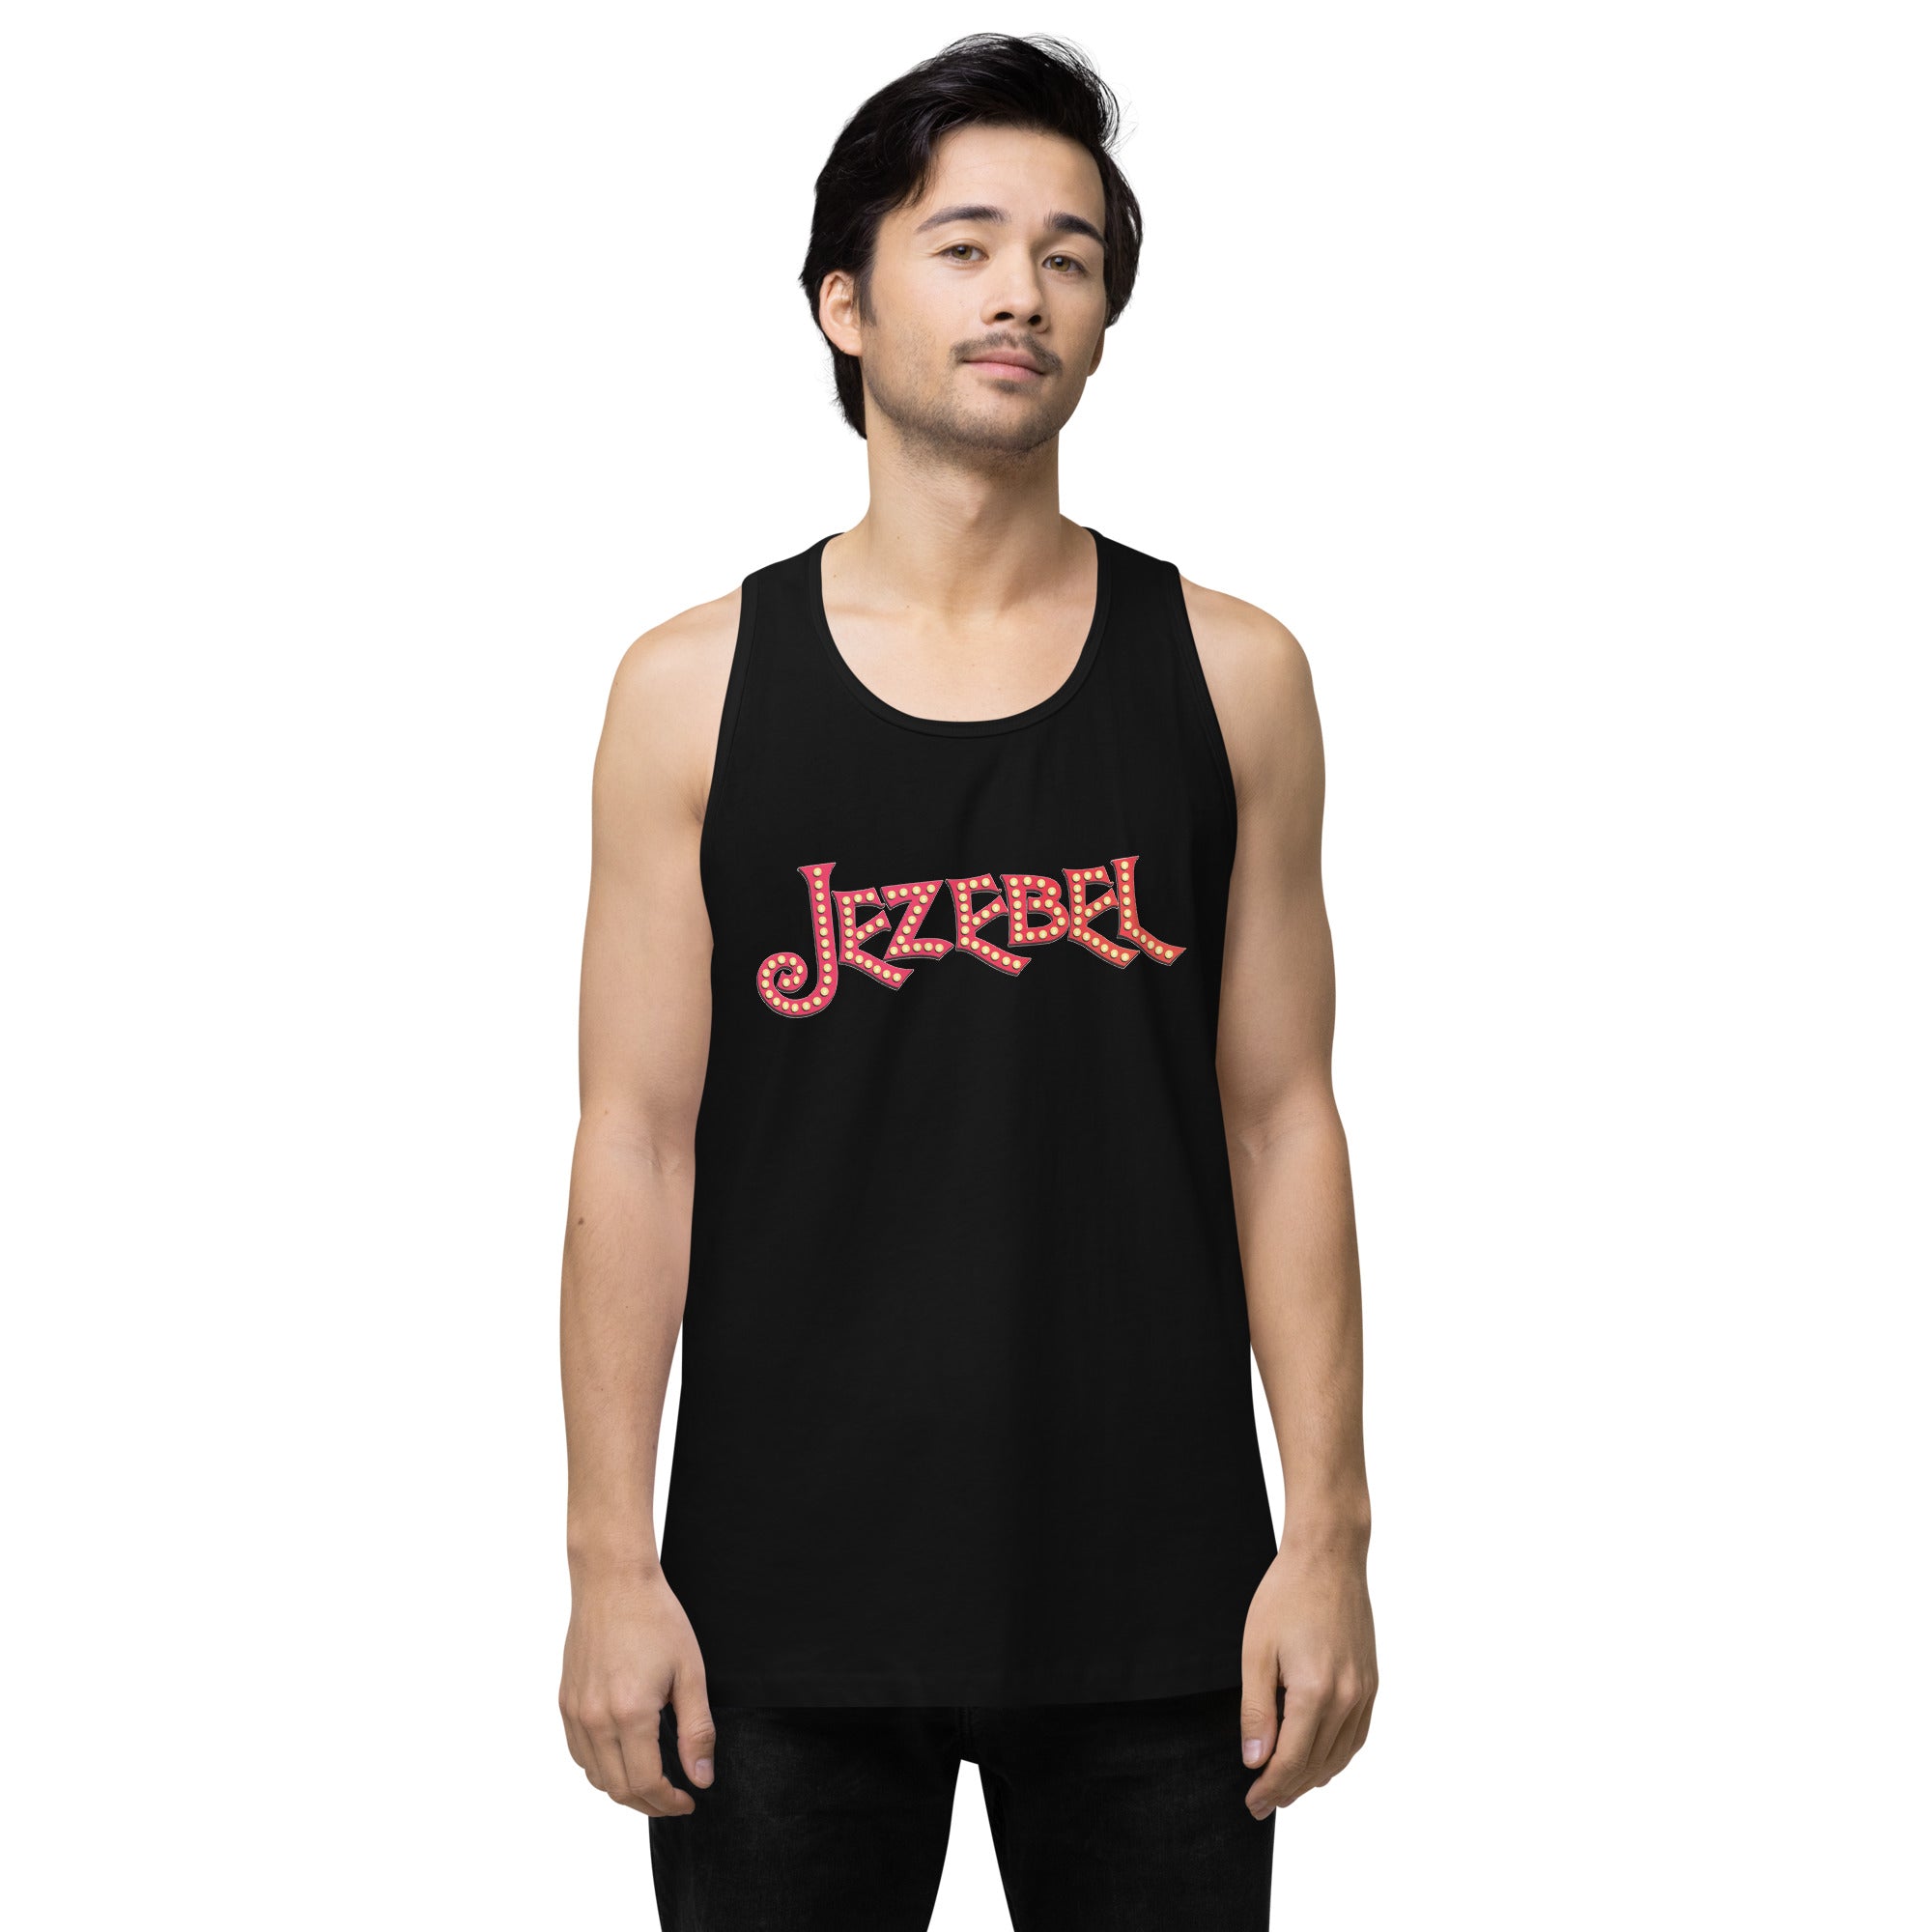 Show Time - Men’s premium tank top - Jezebel